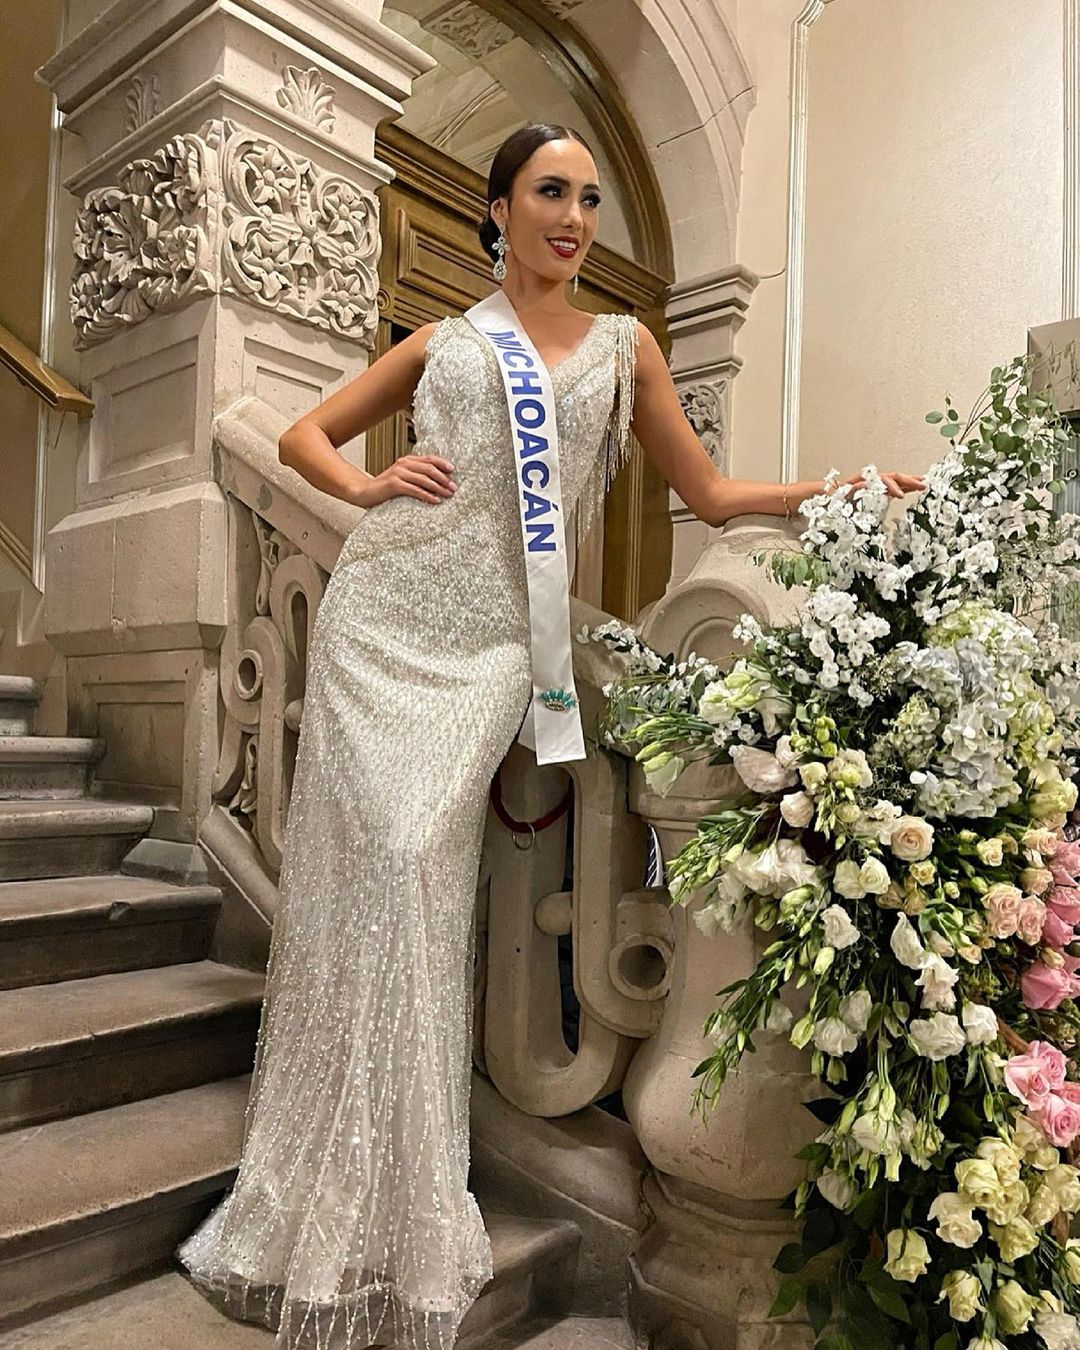 karolina vidales, top 6 de miss world 2021. - Página 12 21767610